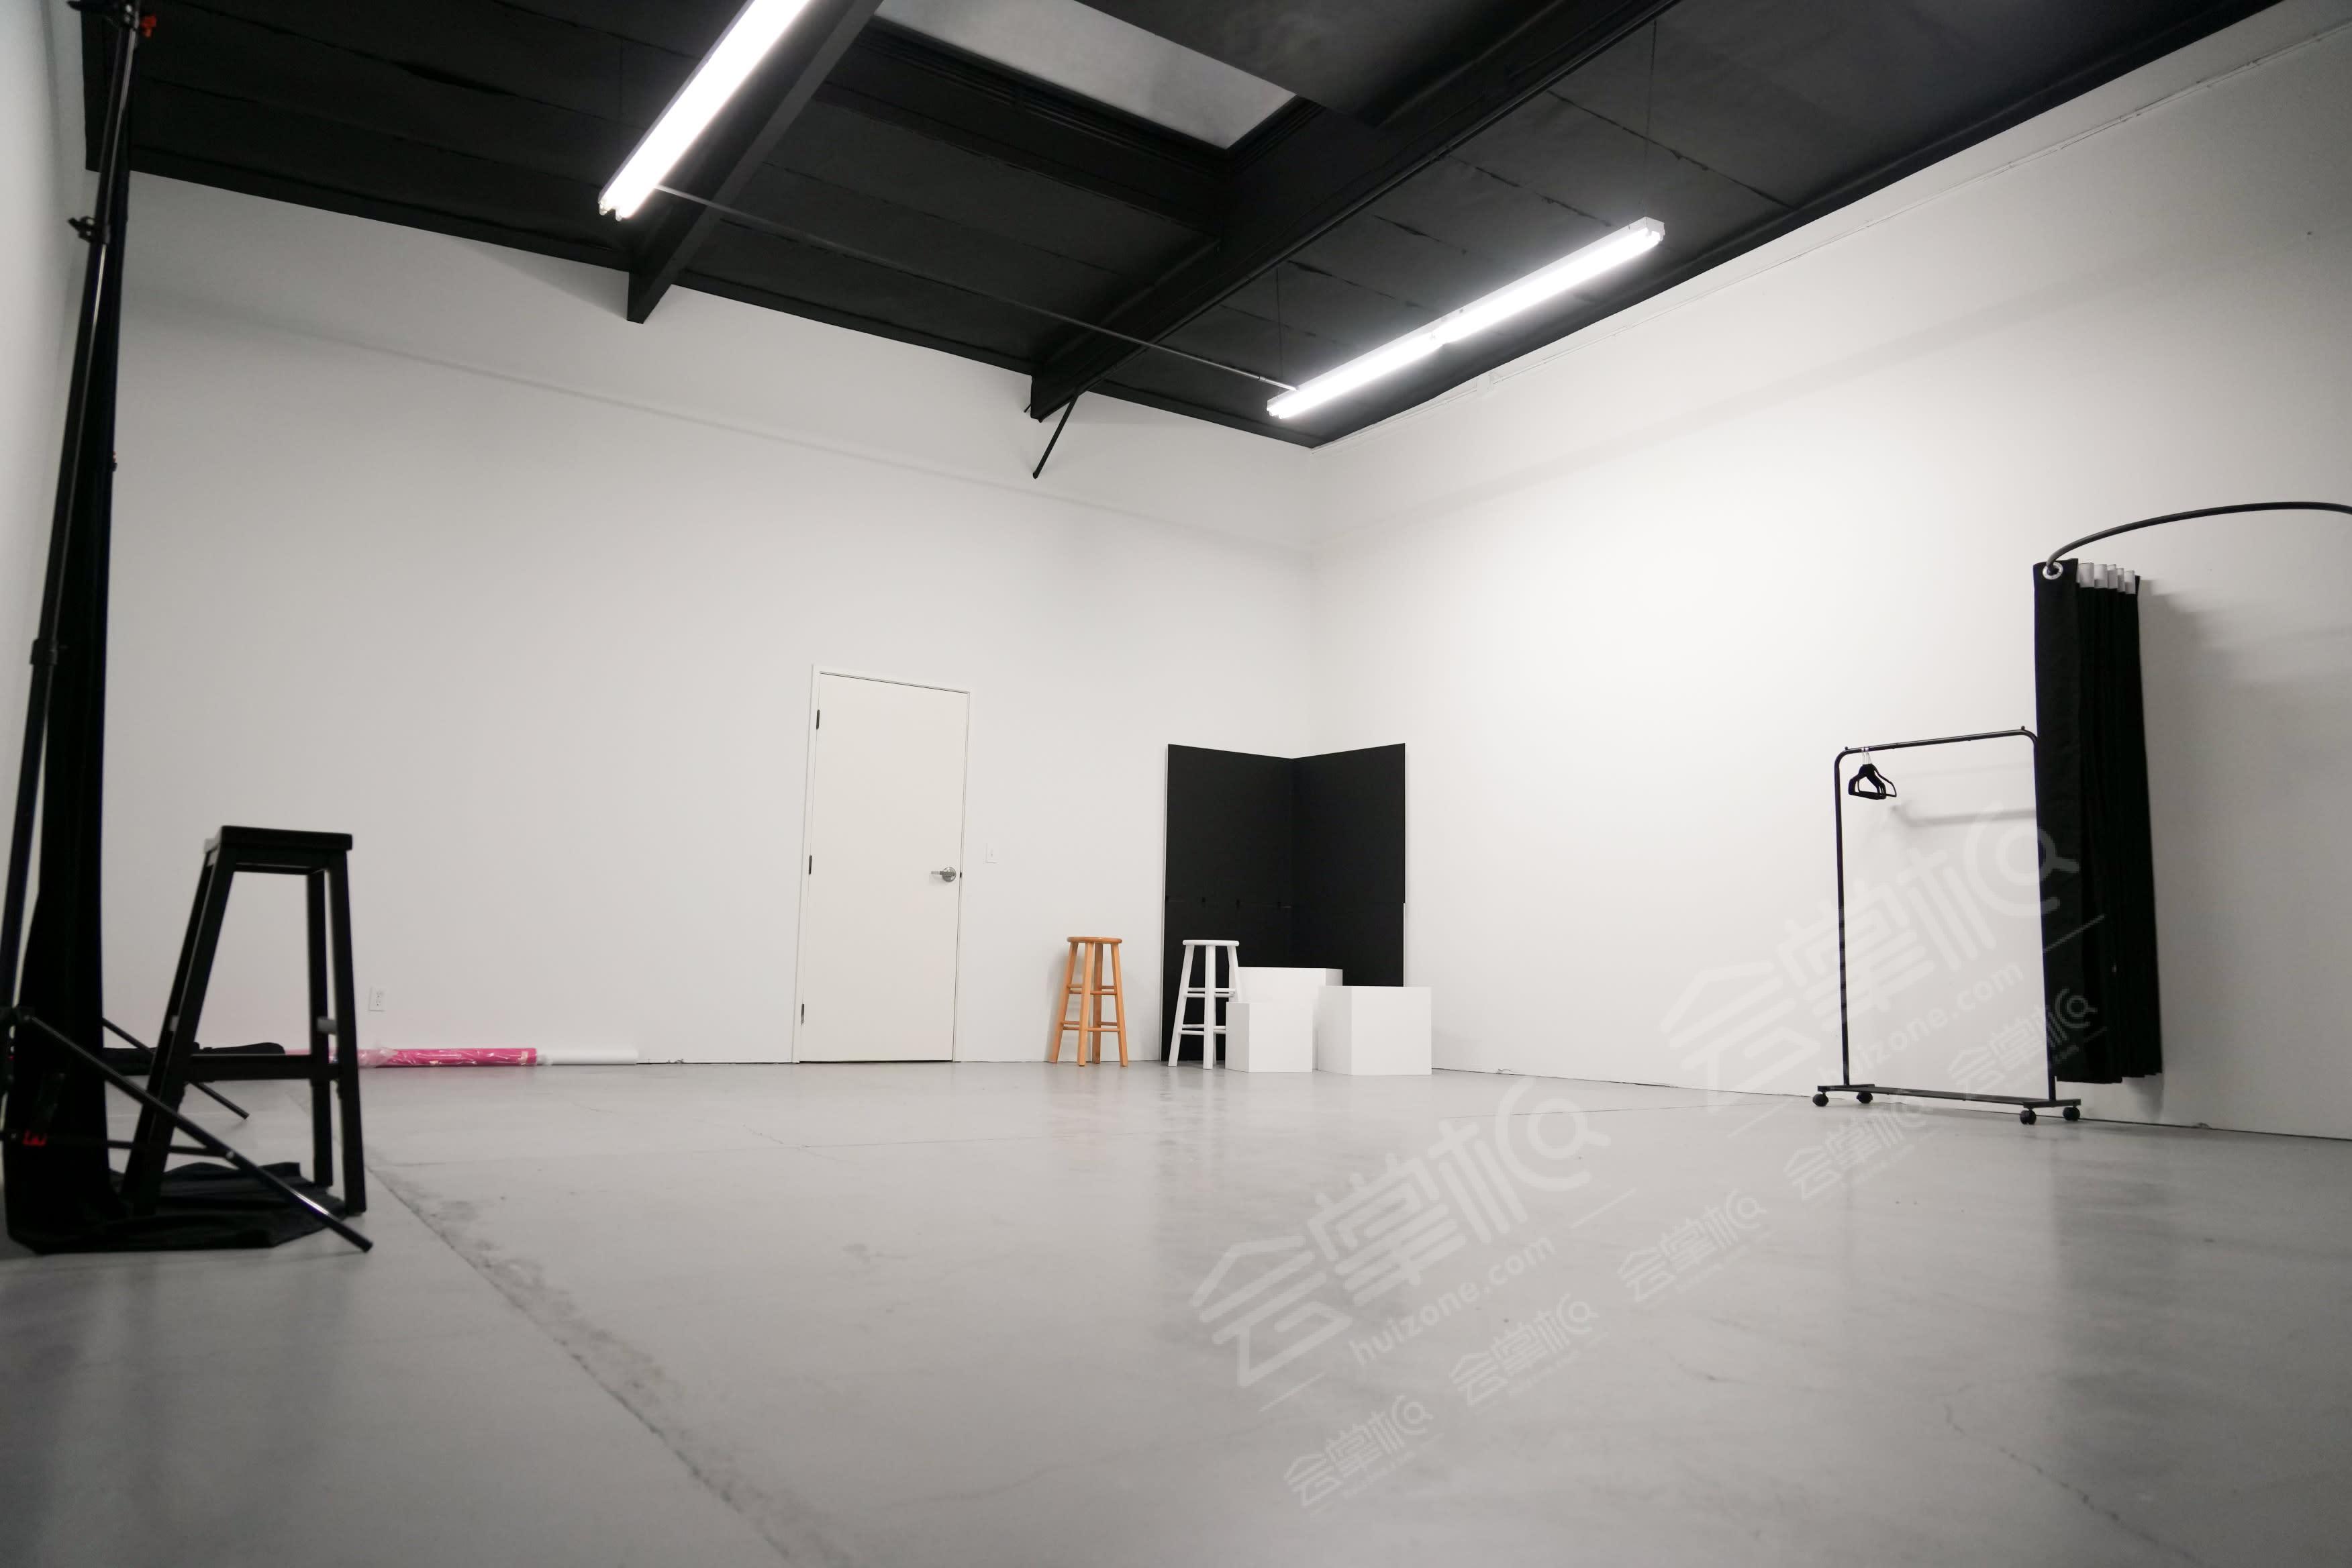 Urban spacious studio with natural lighting